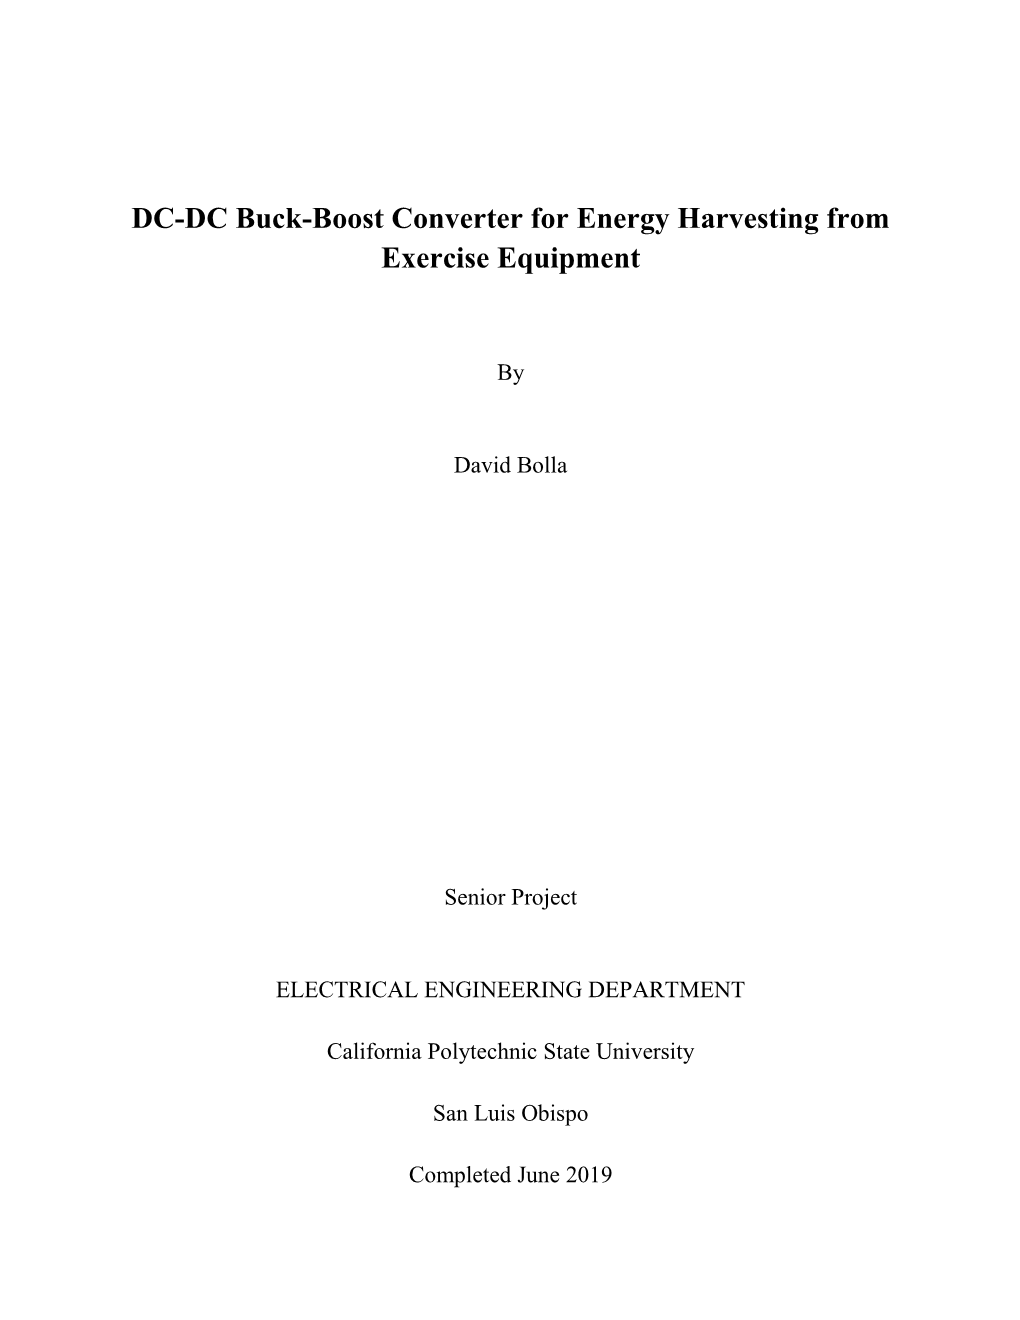 DC-DC Buck-Boost Converter for Energy Harvesting from Exercise Equipment